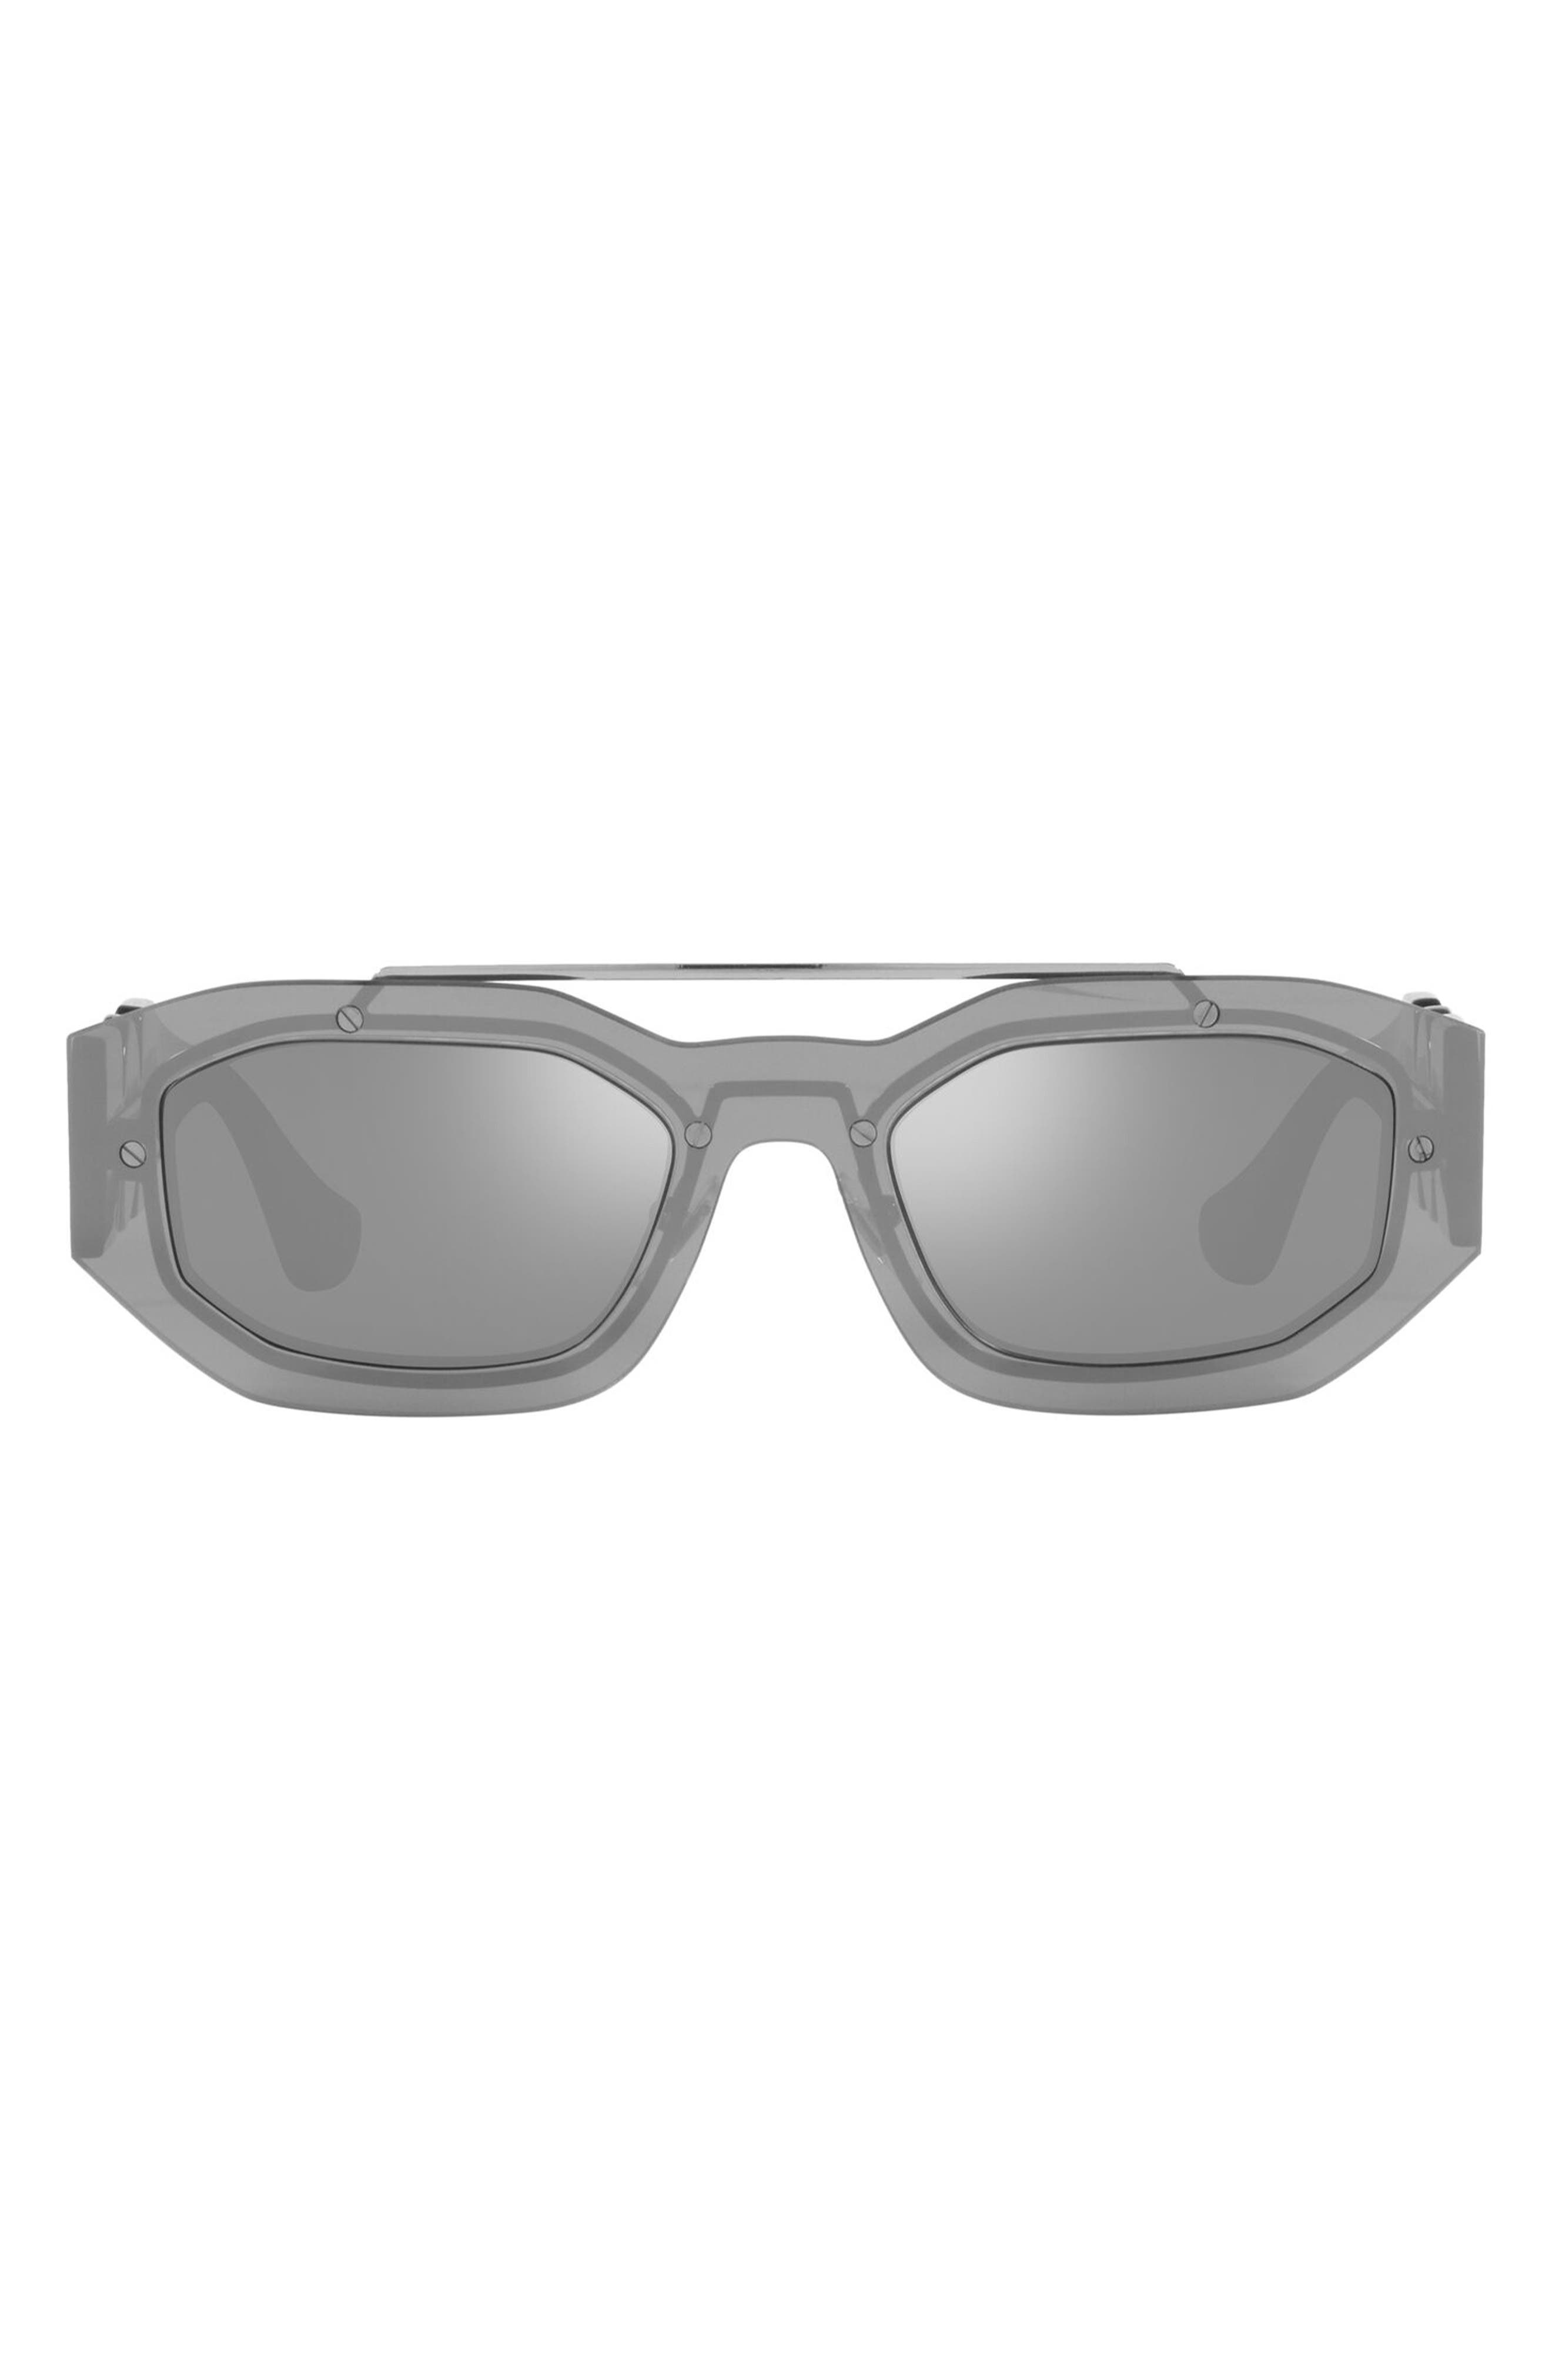 Versace 51mm Irregular Mirrored Sunglasses in Light Grey Mirror Silver at Nordstrom